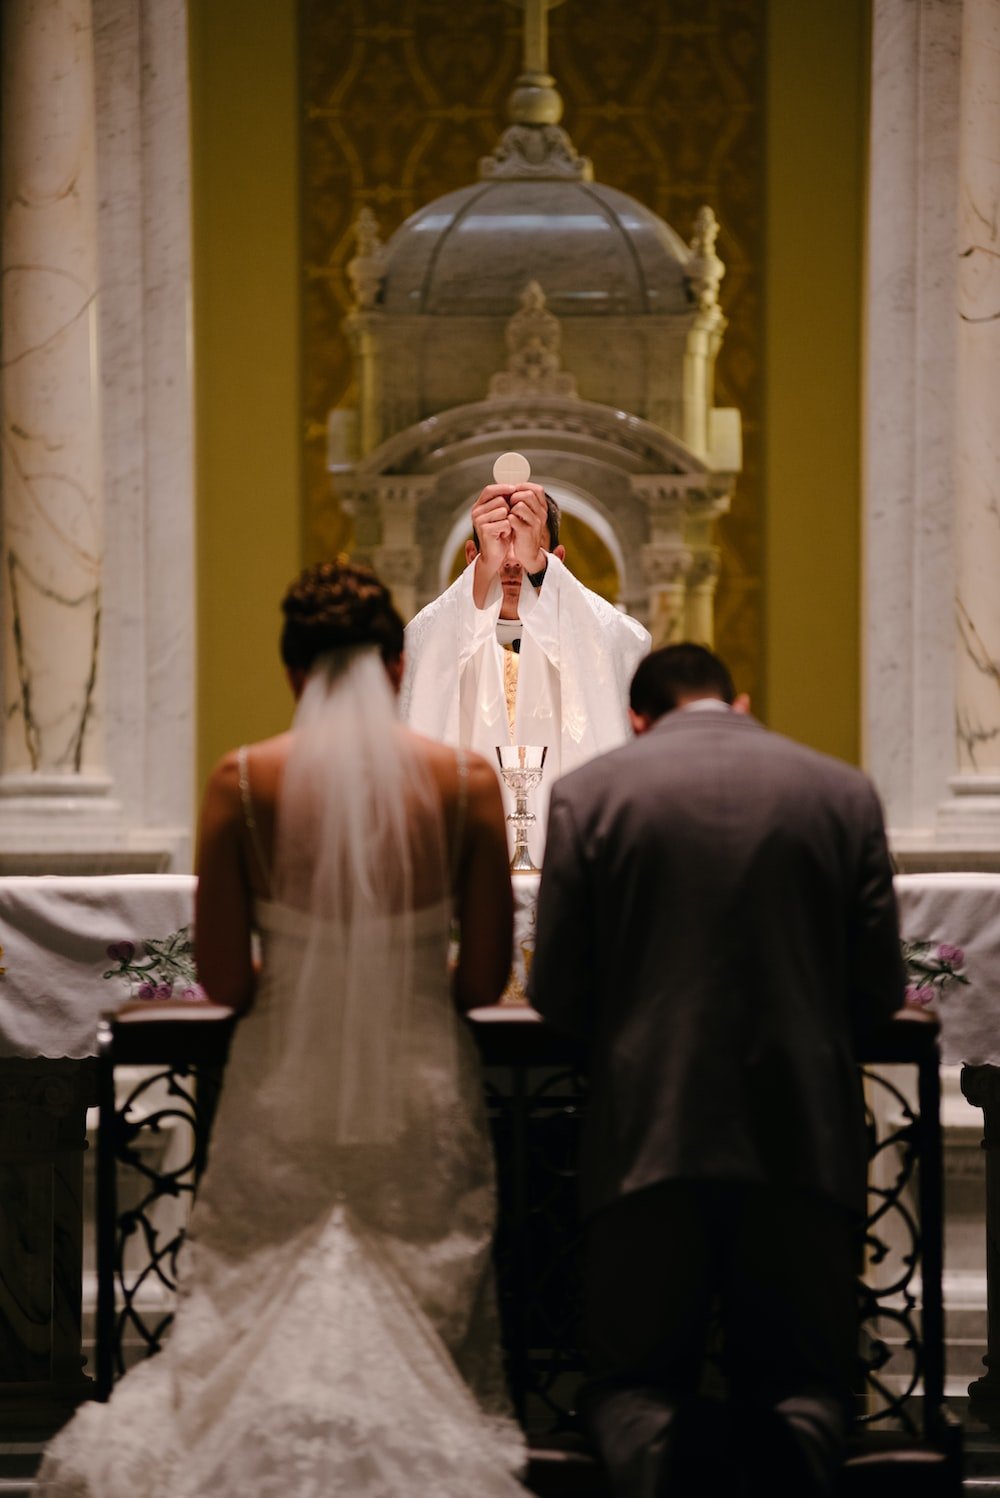 Catholic Wedding Picture. Download Free Image